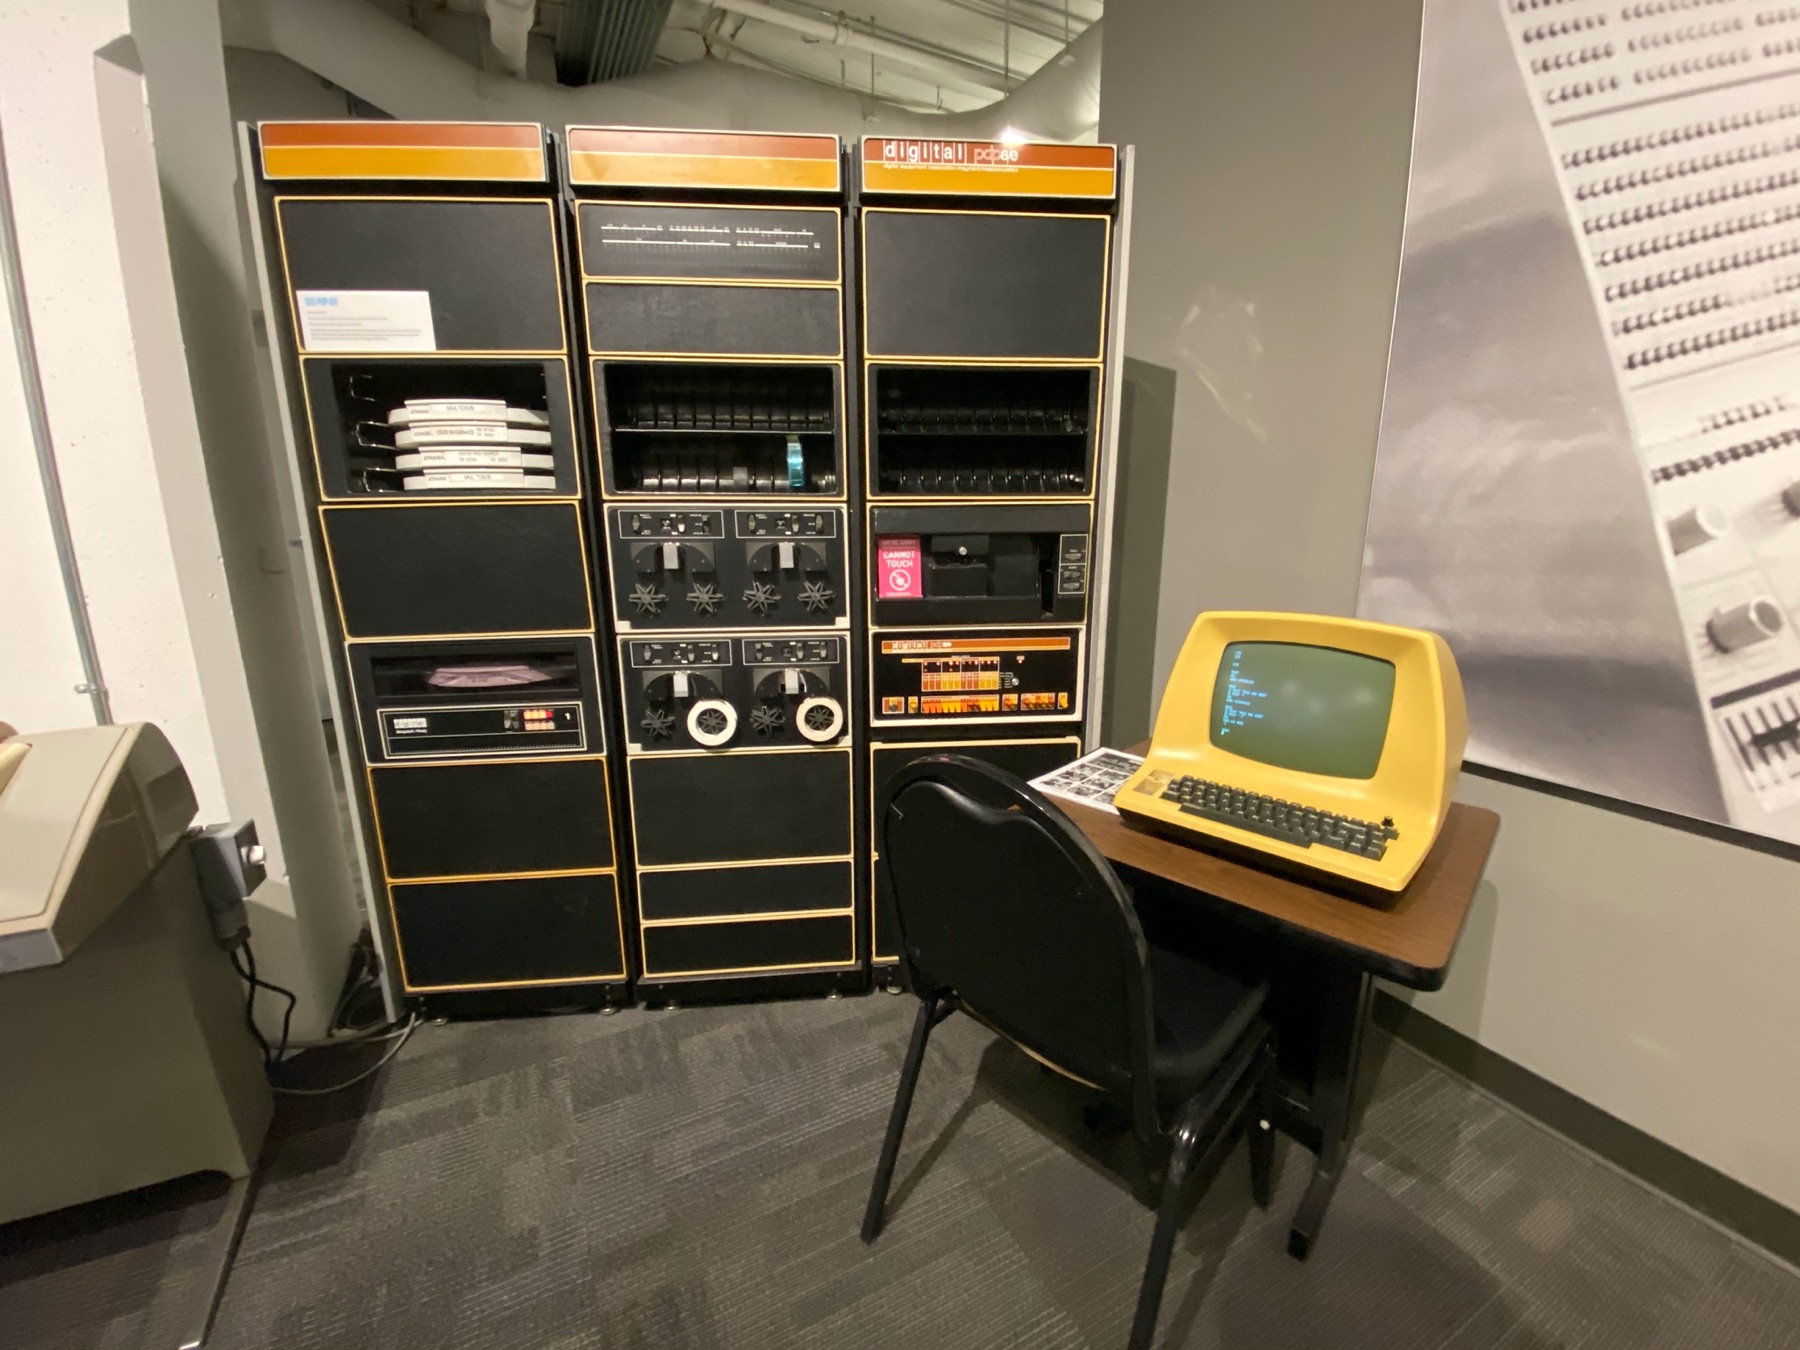 Living Computers Museum 4 - Museum Computer Lab digital server